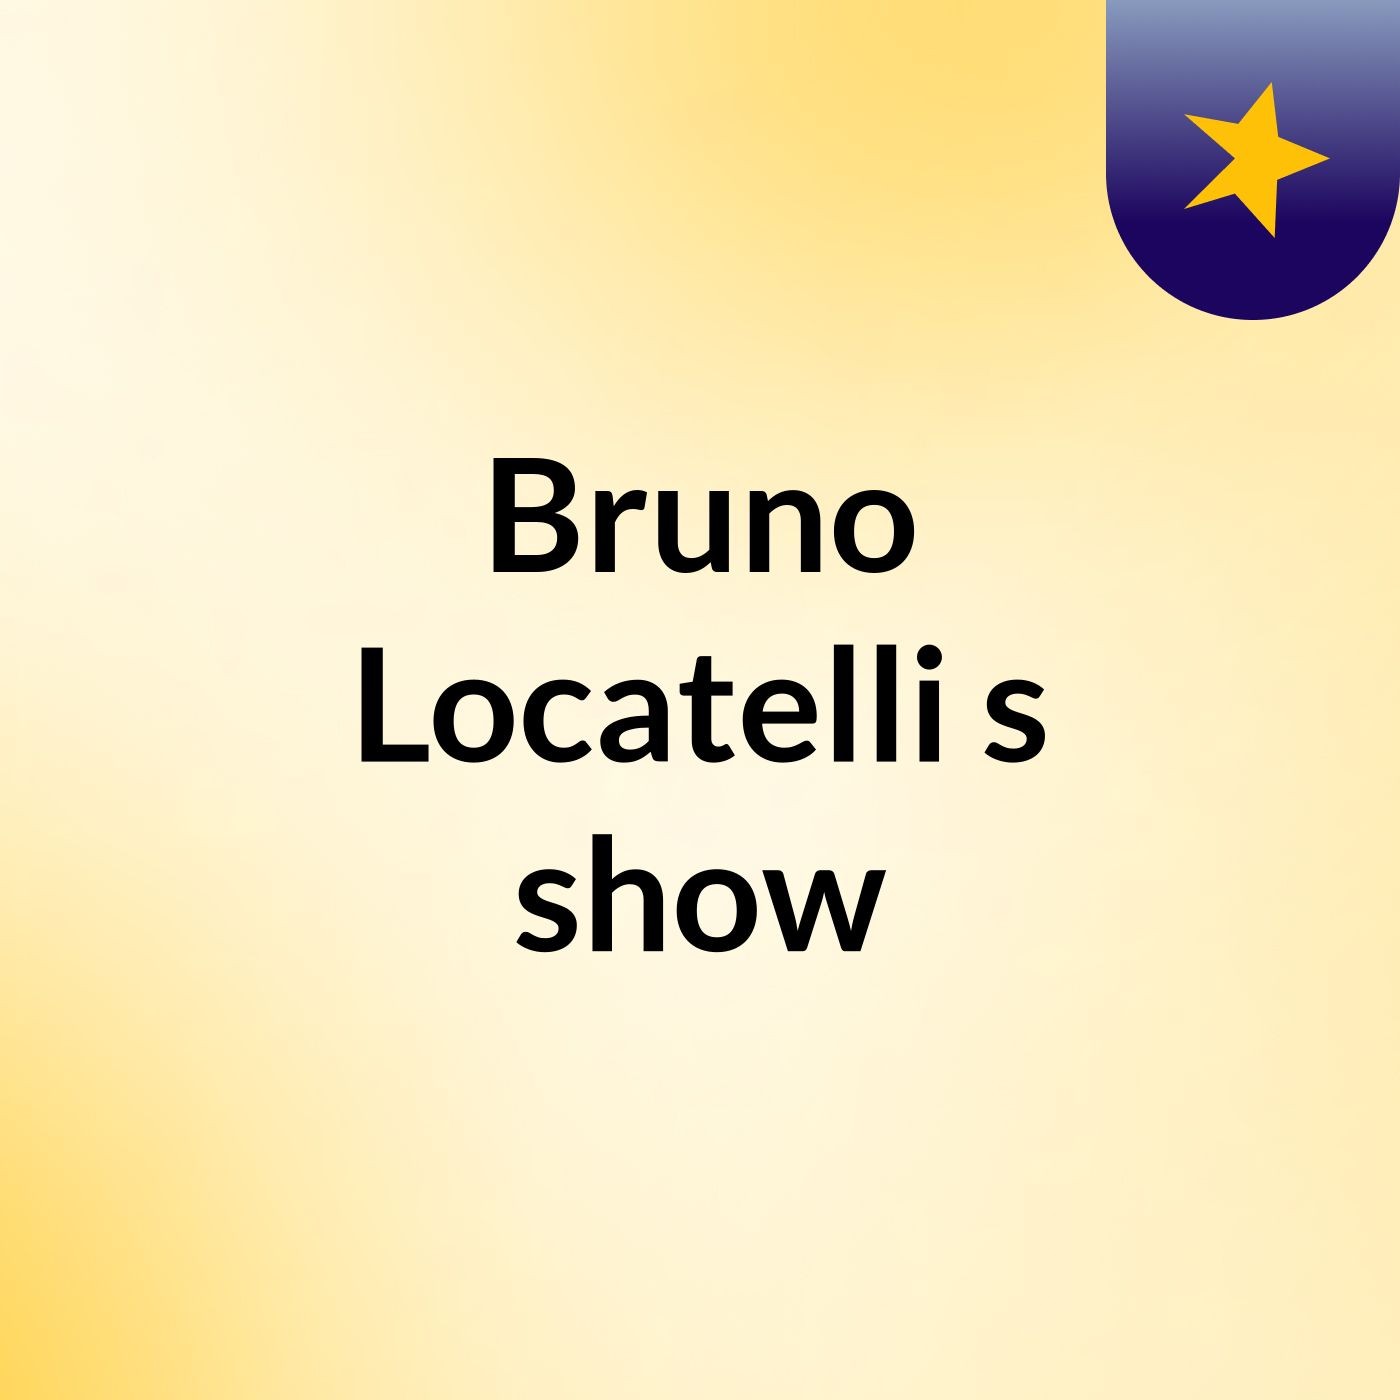 Bruno Locatelli's show